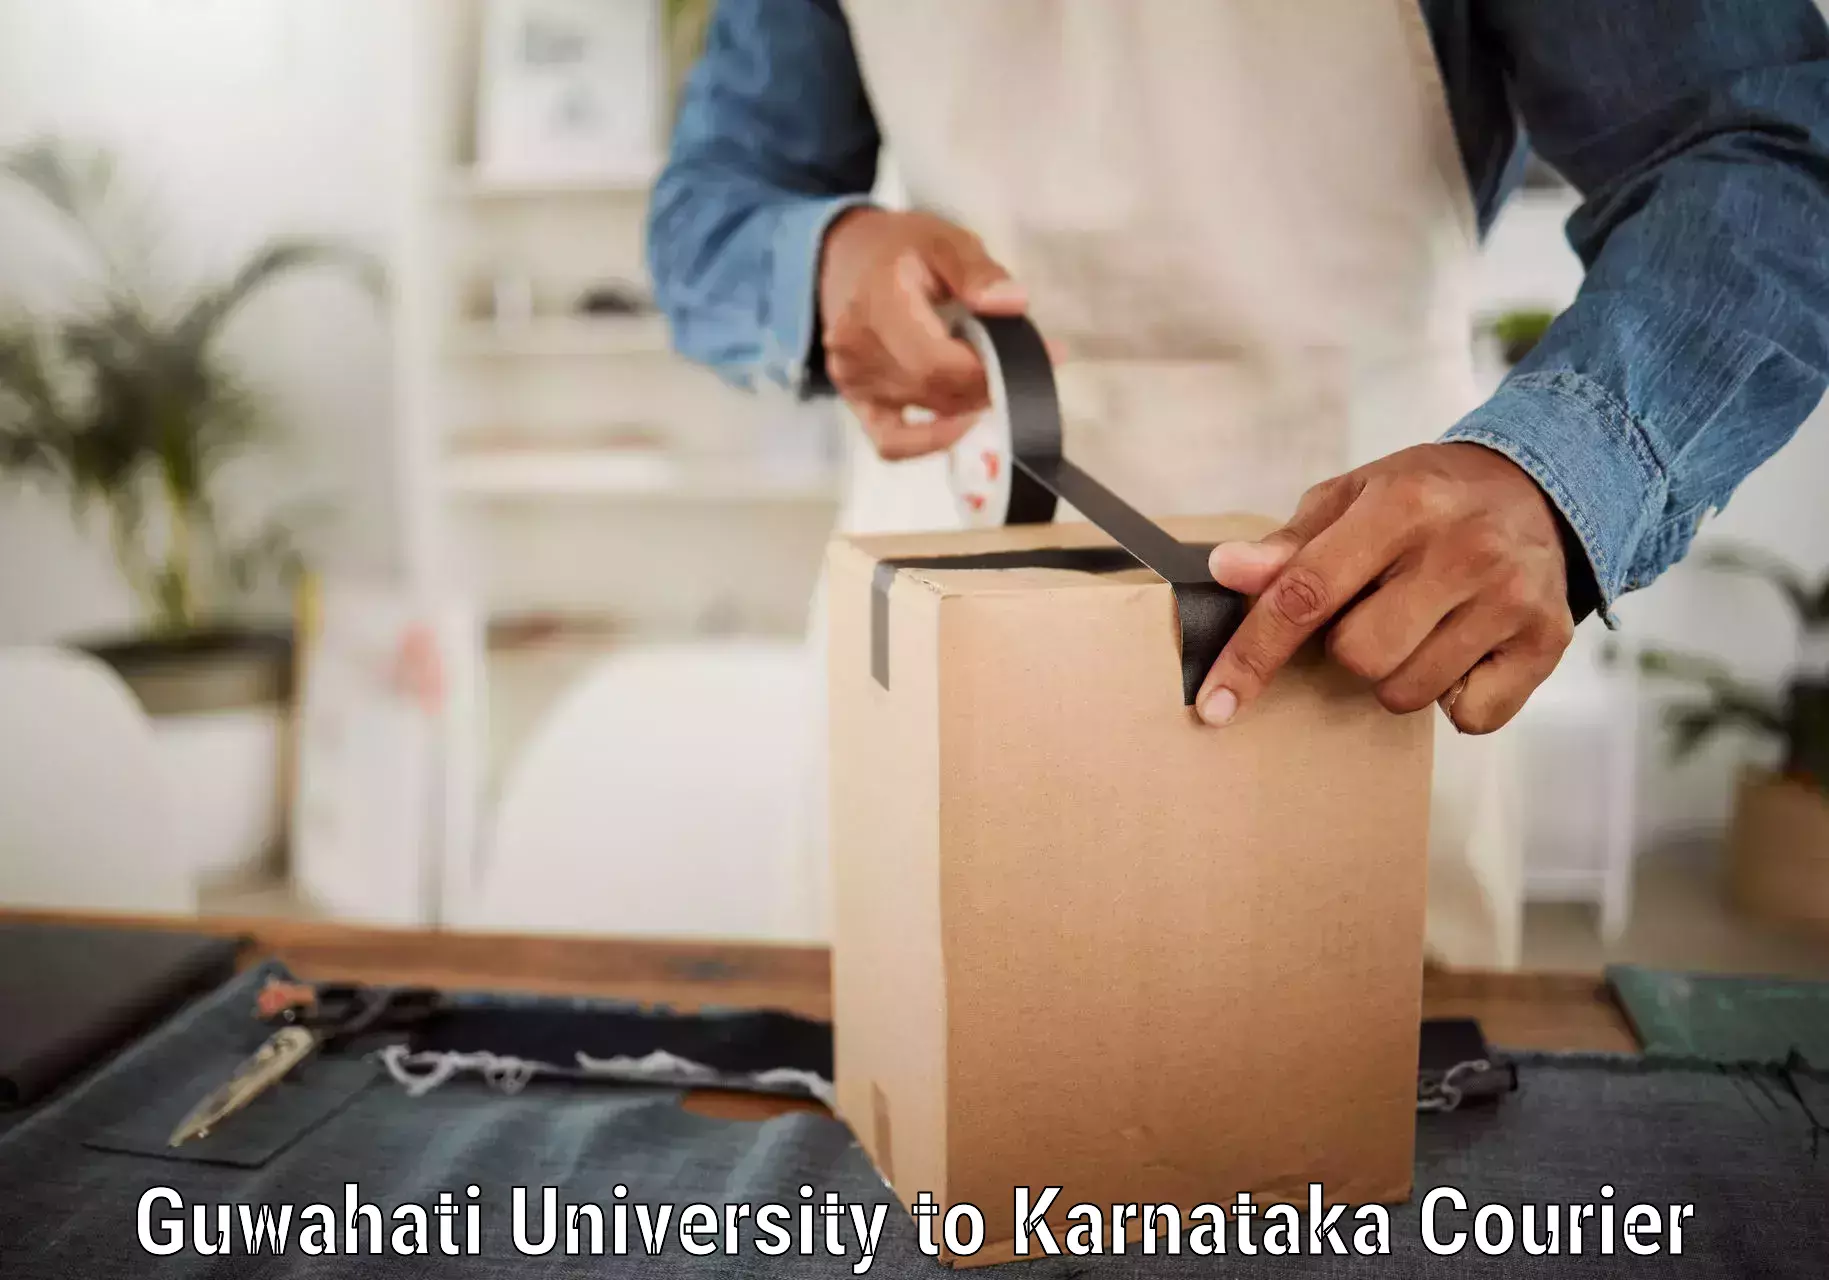 Business delivery service Guwahati University to Karnataka